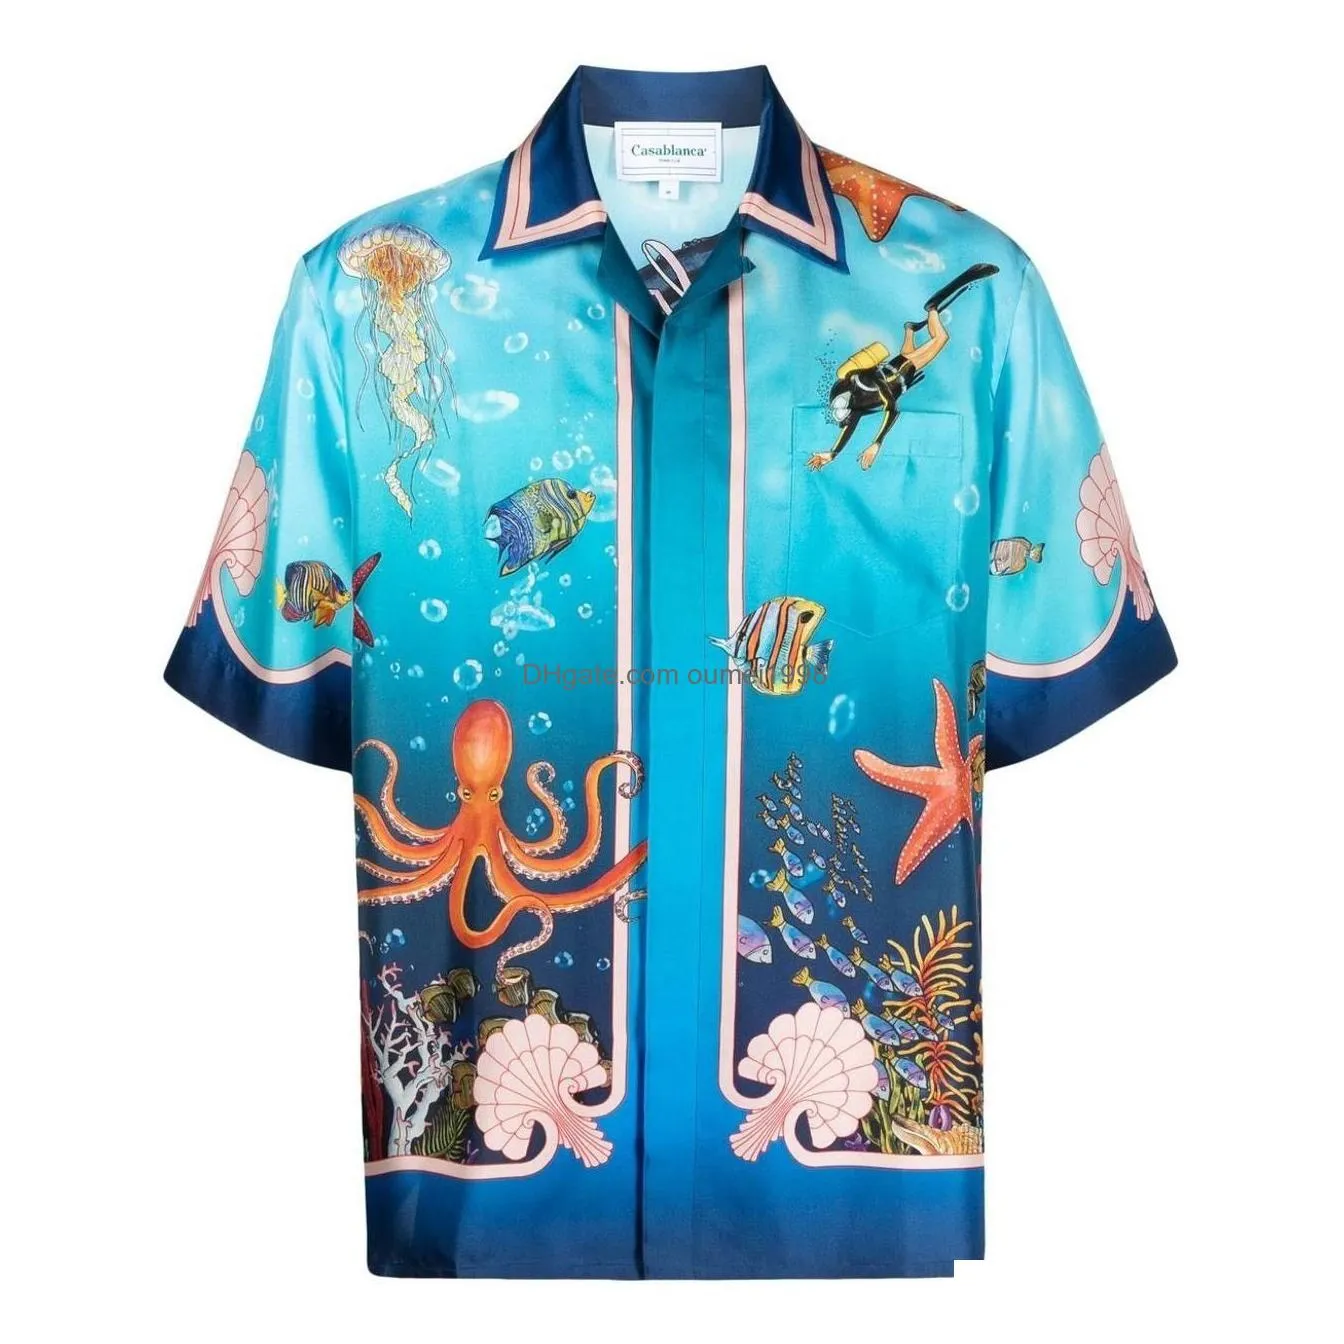  casablanca designer button up mens silk shirt casual hawaii short sleeve beach shirts casablanc polos